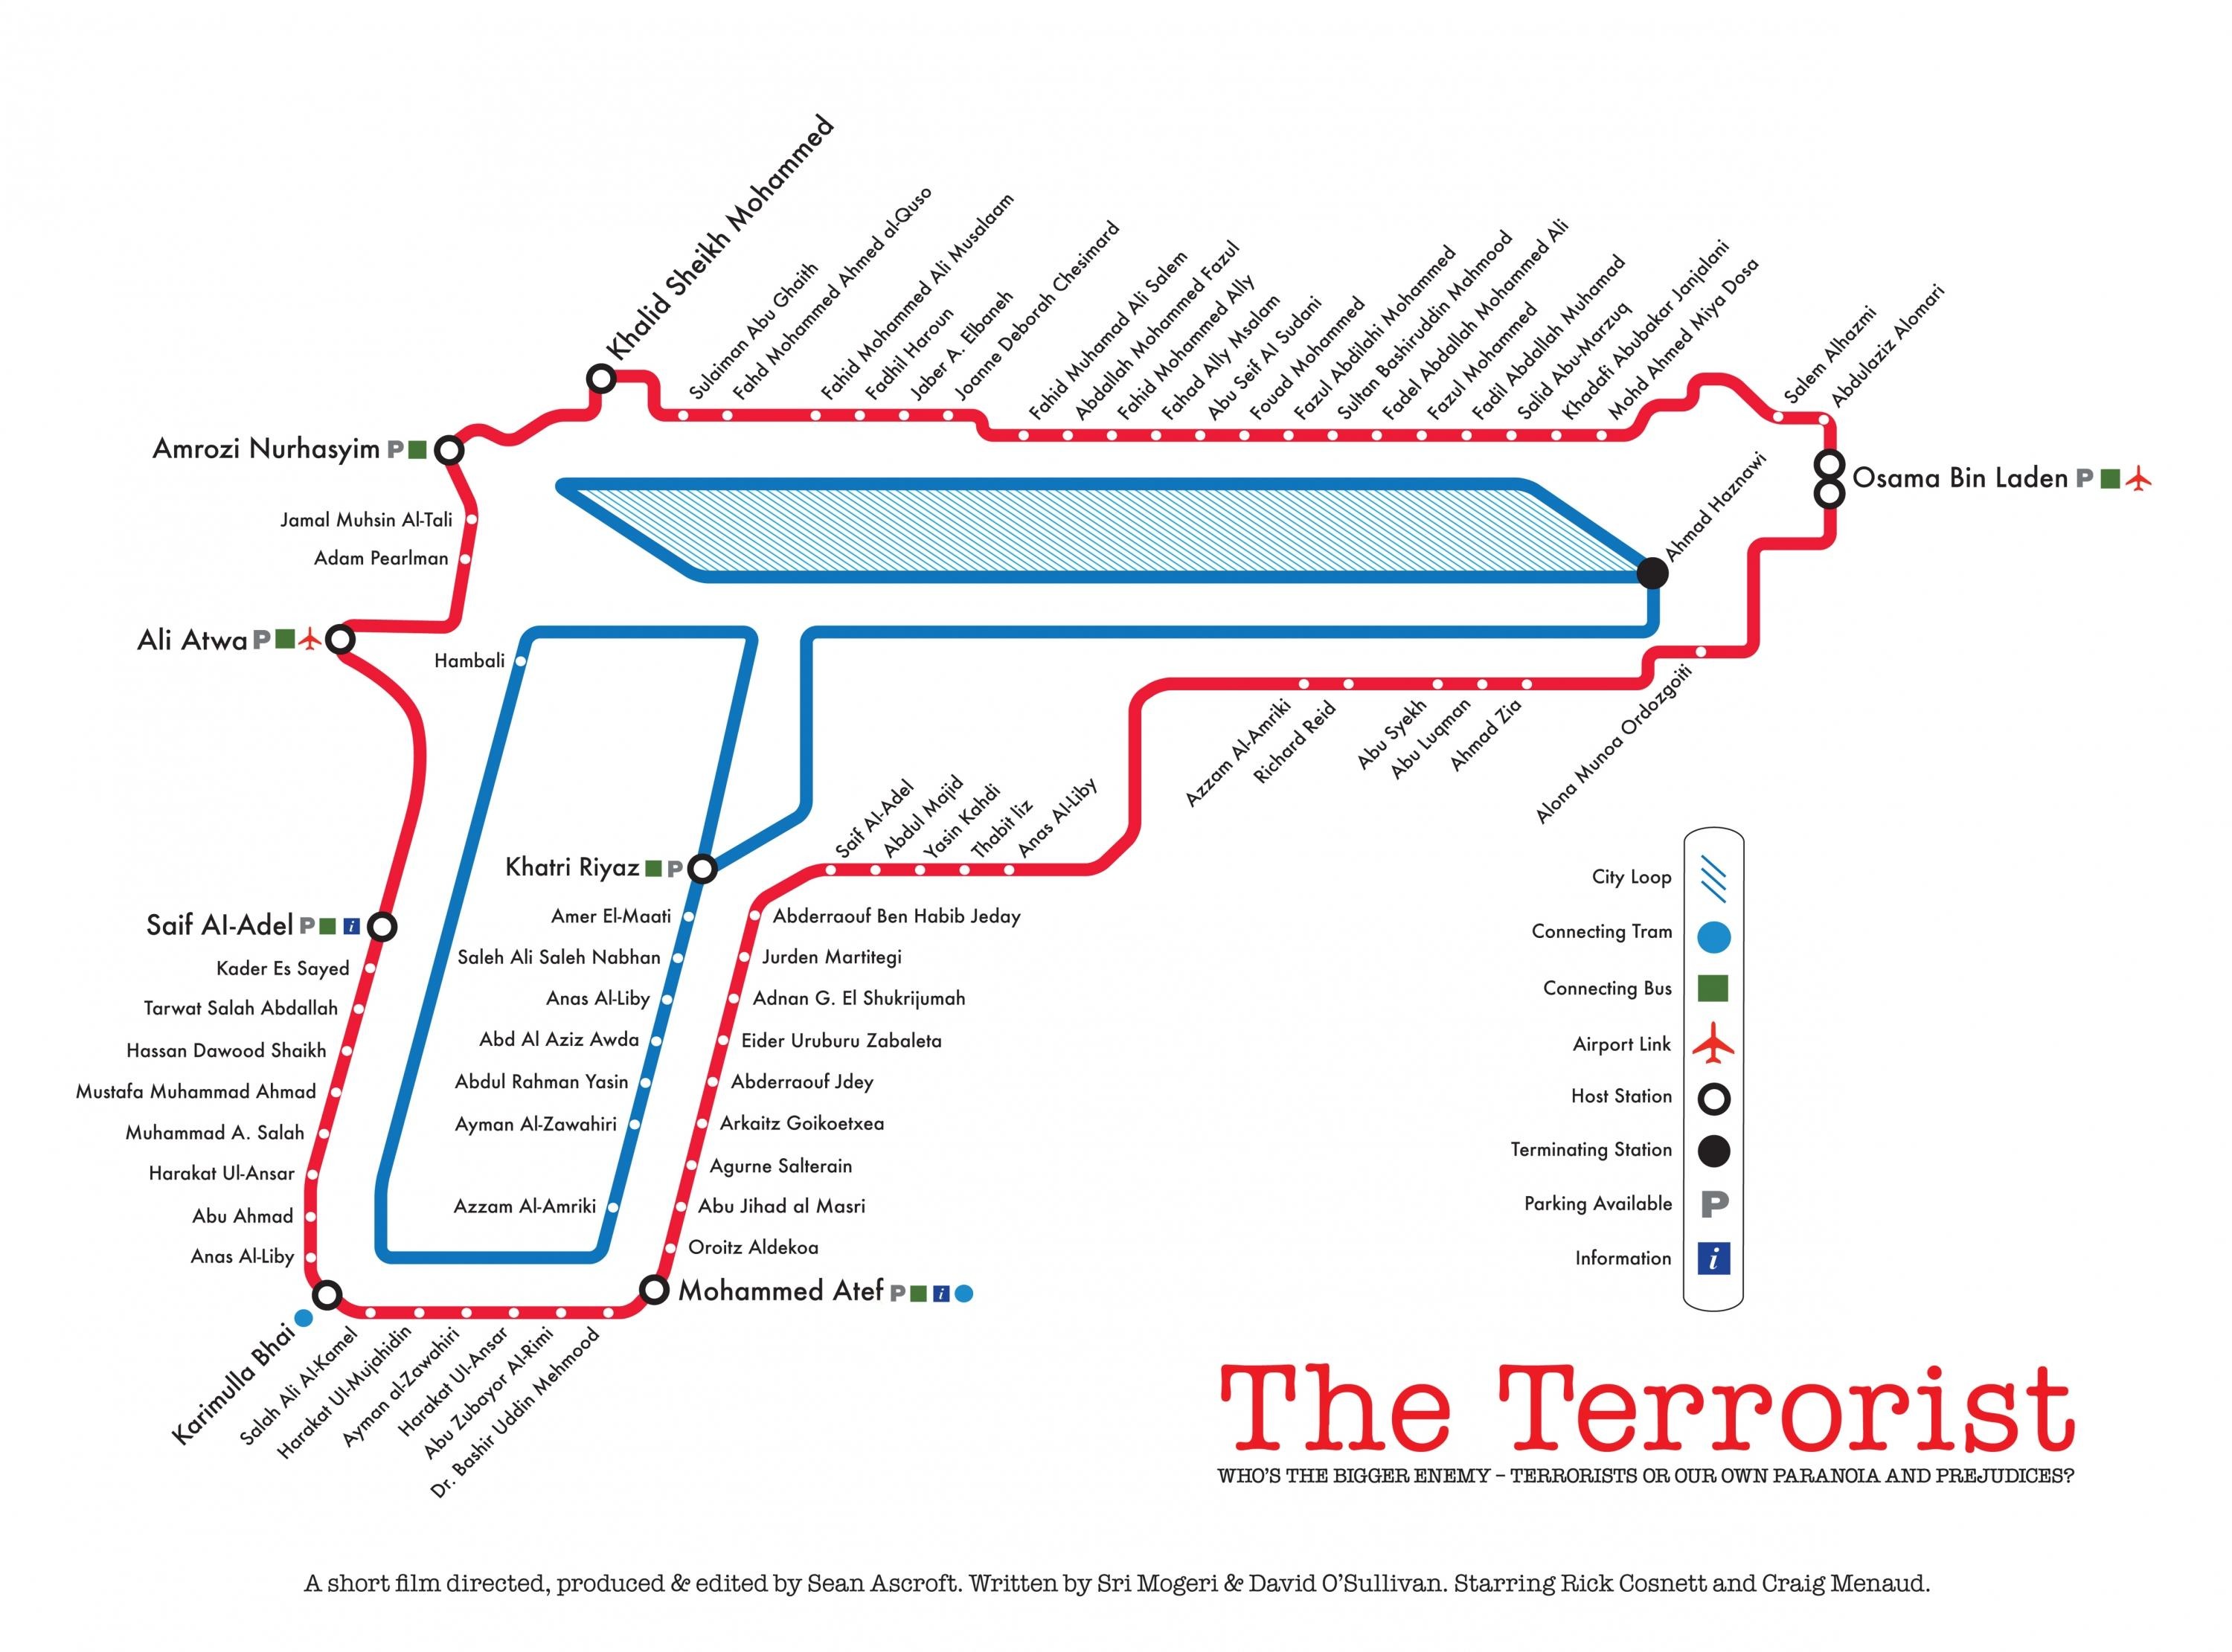 THE TERRORIST - A SHORT FILM